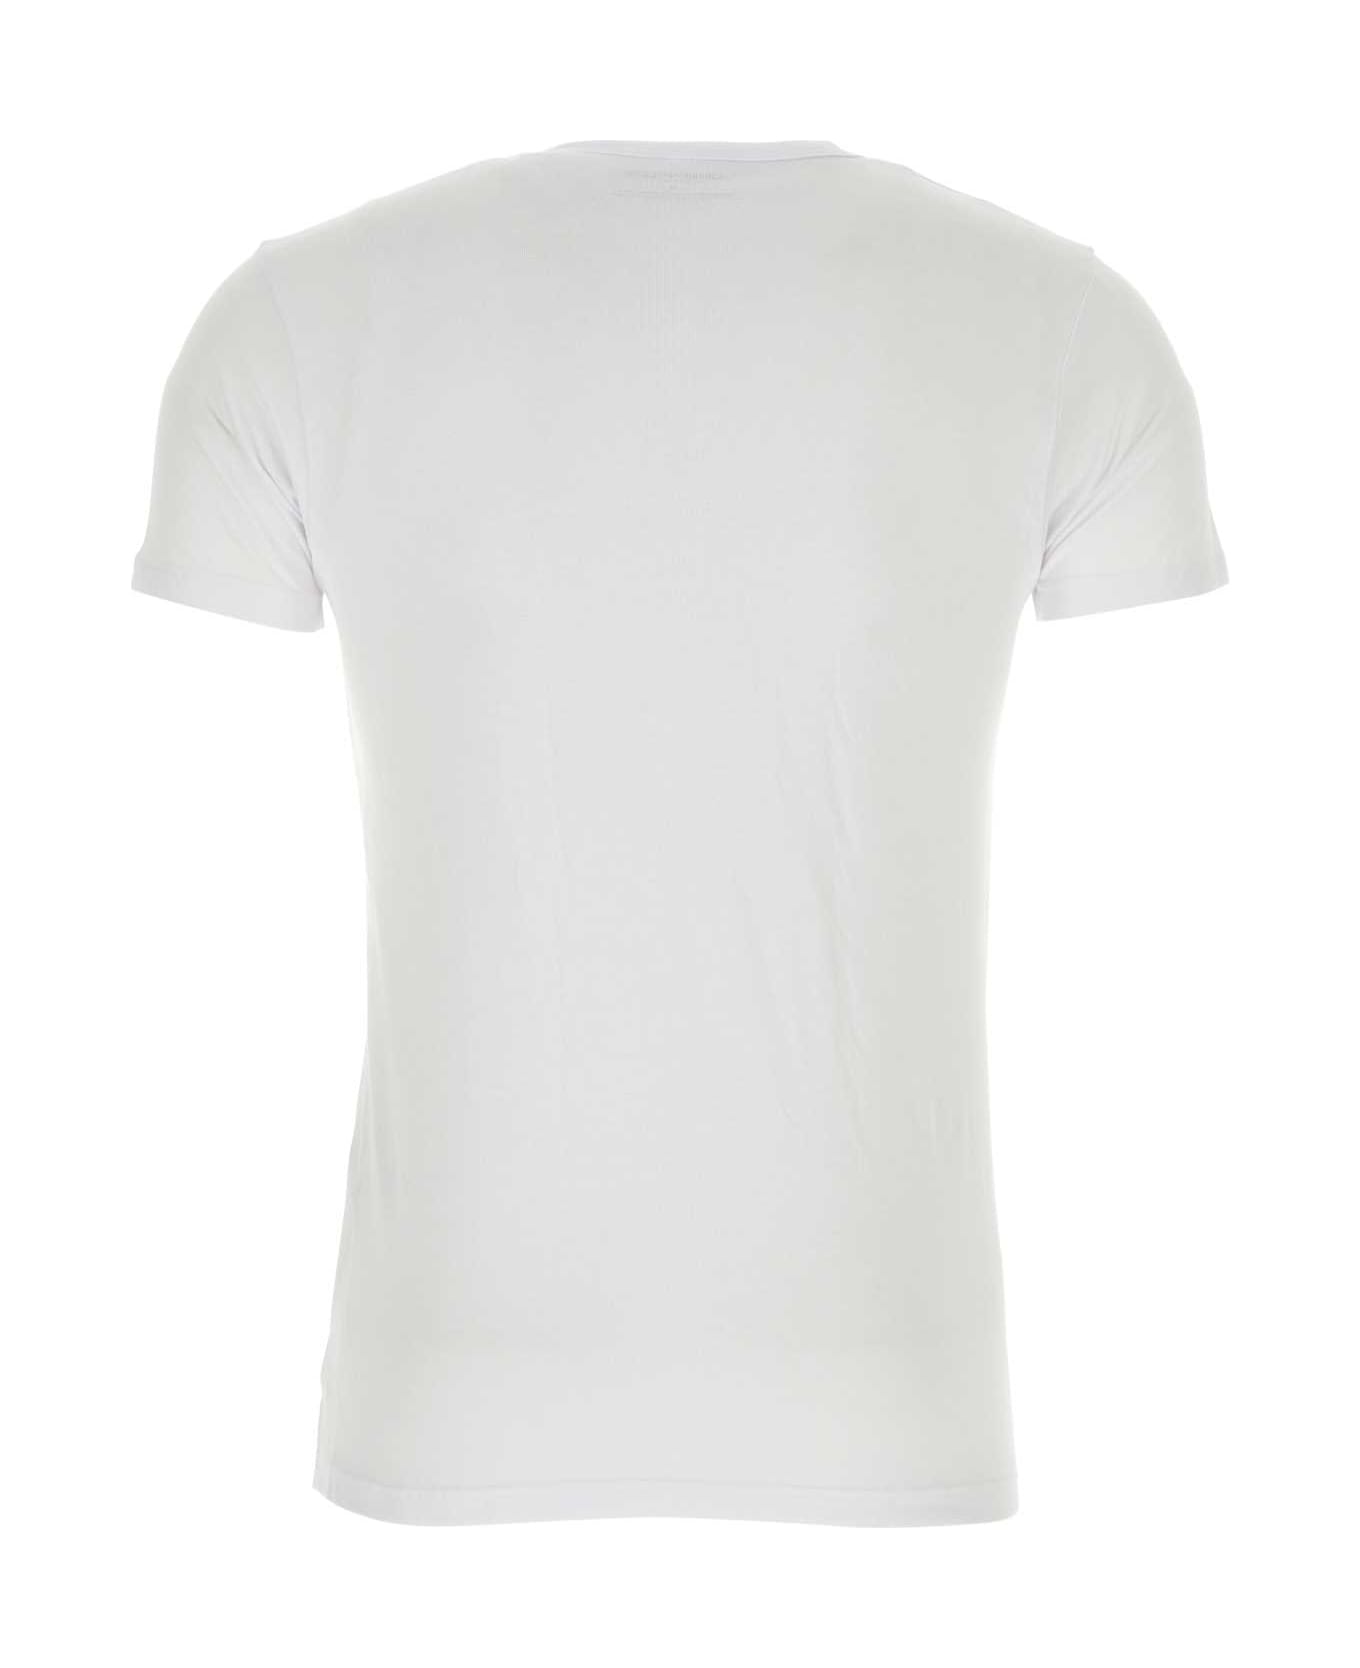 Emporio Armani White Stretch Cotton Underwear T-shirt - 04710 シャツ